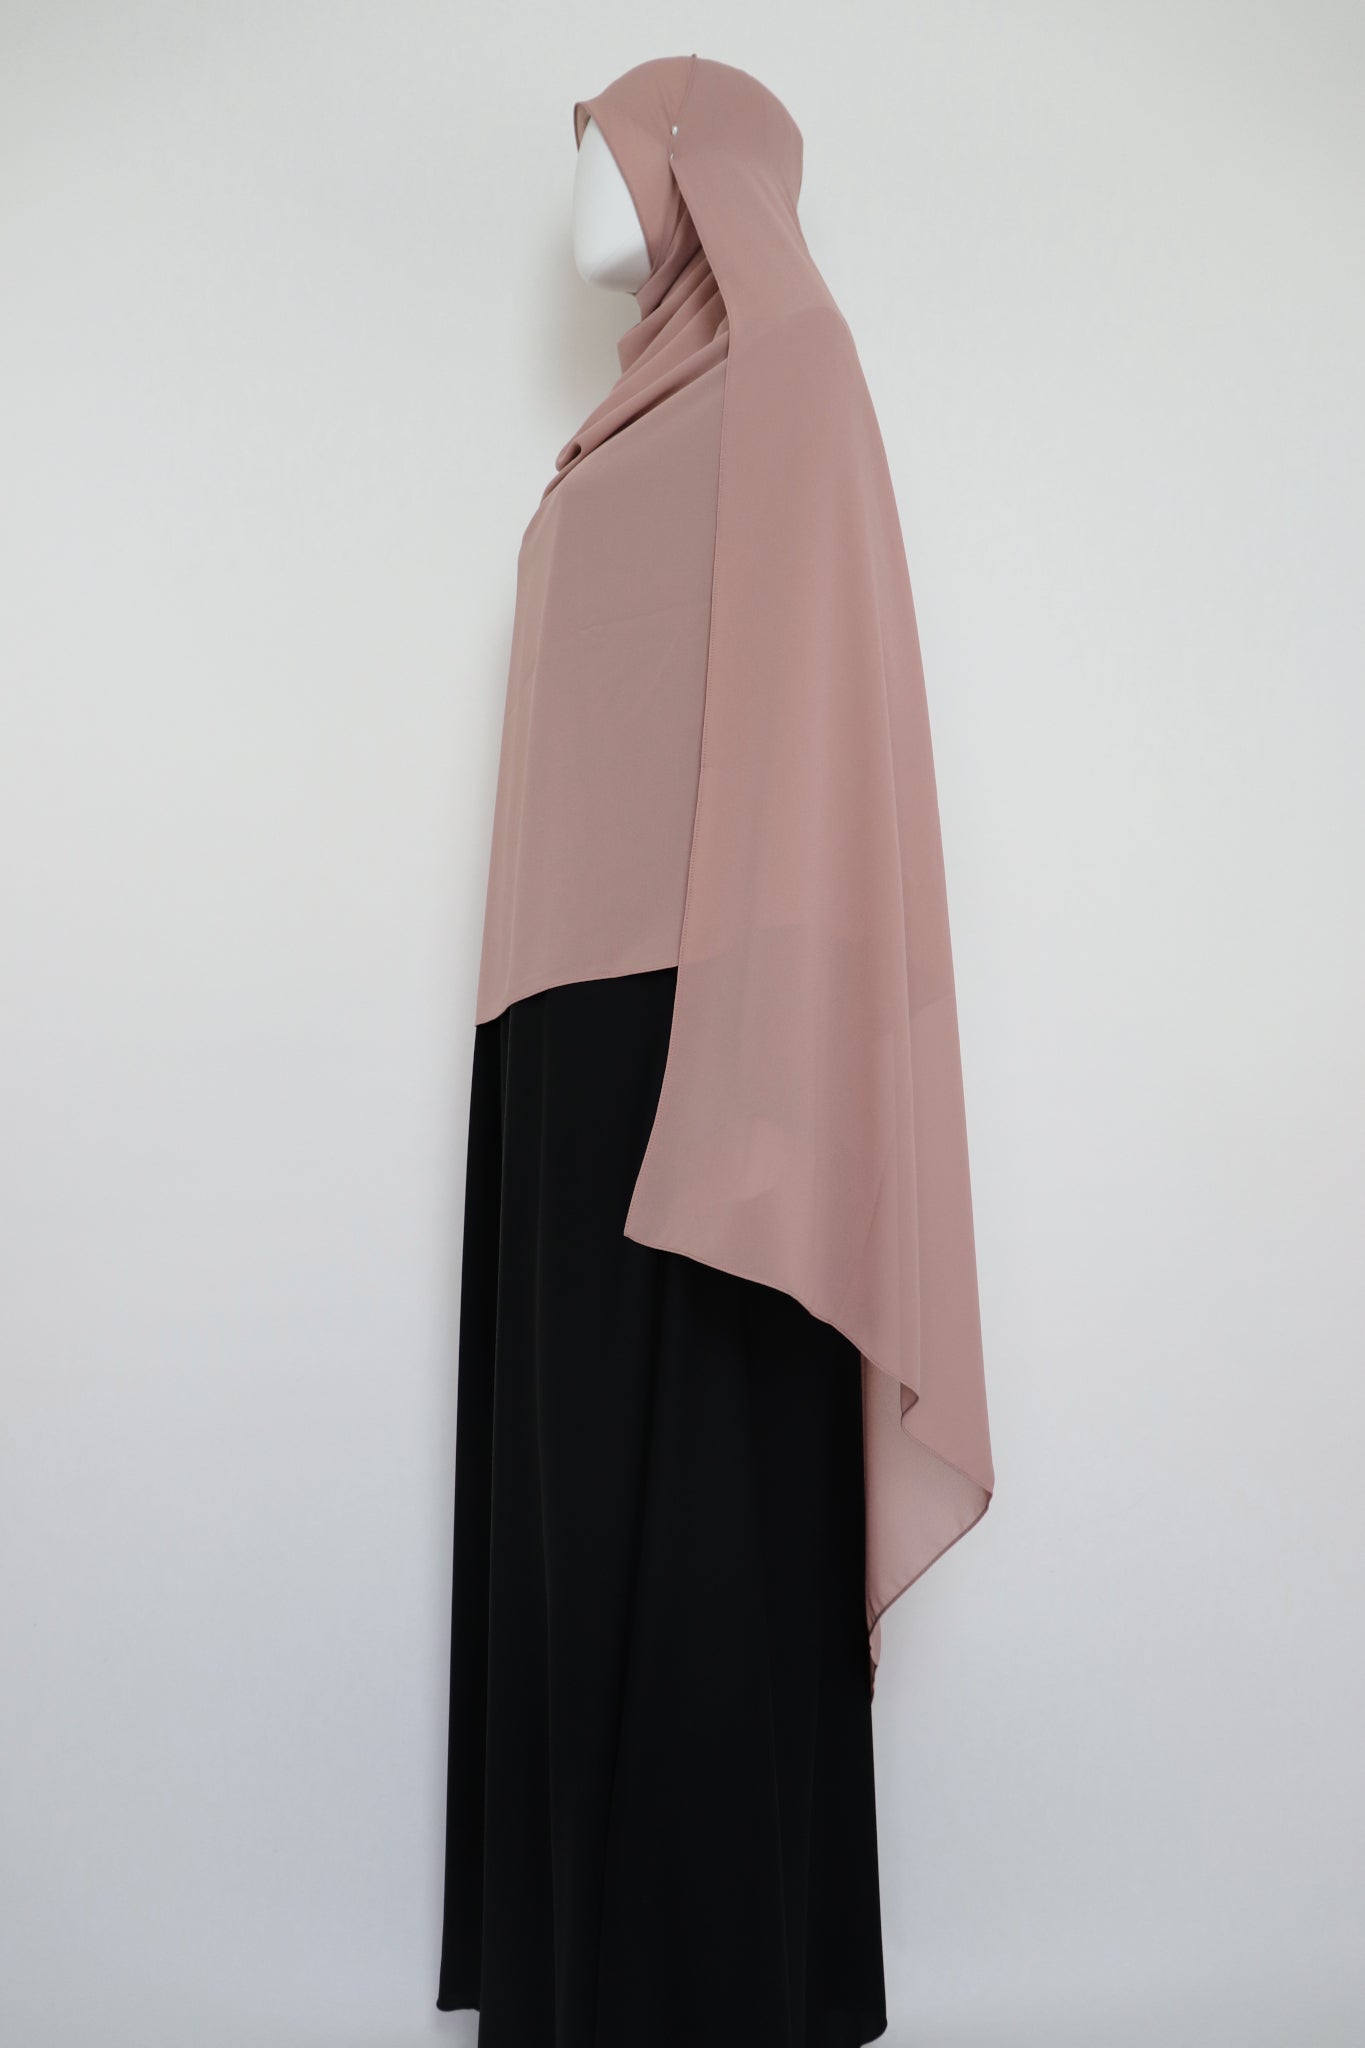 XL Premium Chiffon Hijab - Mauve Brown